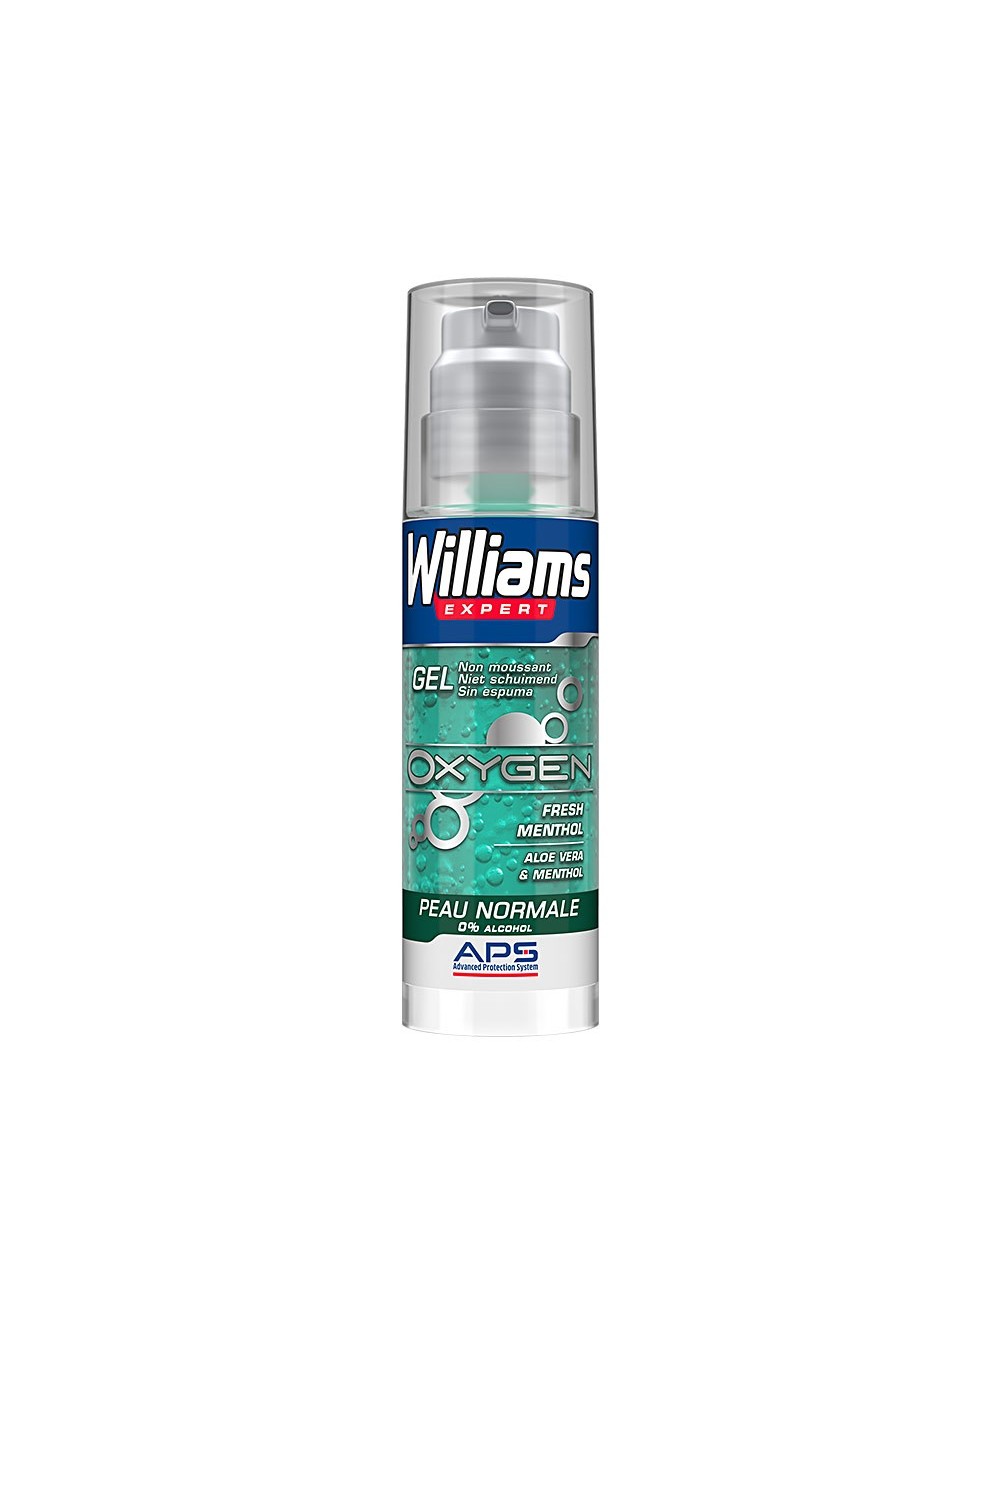 WILLIAMS EXPERT - William Expert Oxygen Shaving Gel Normal Skin